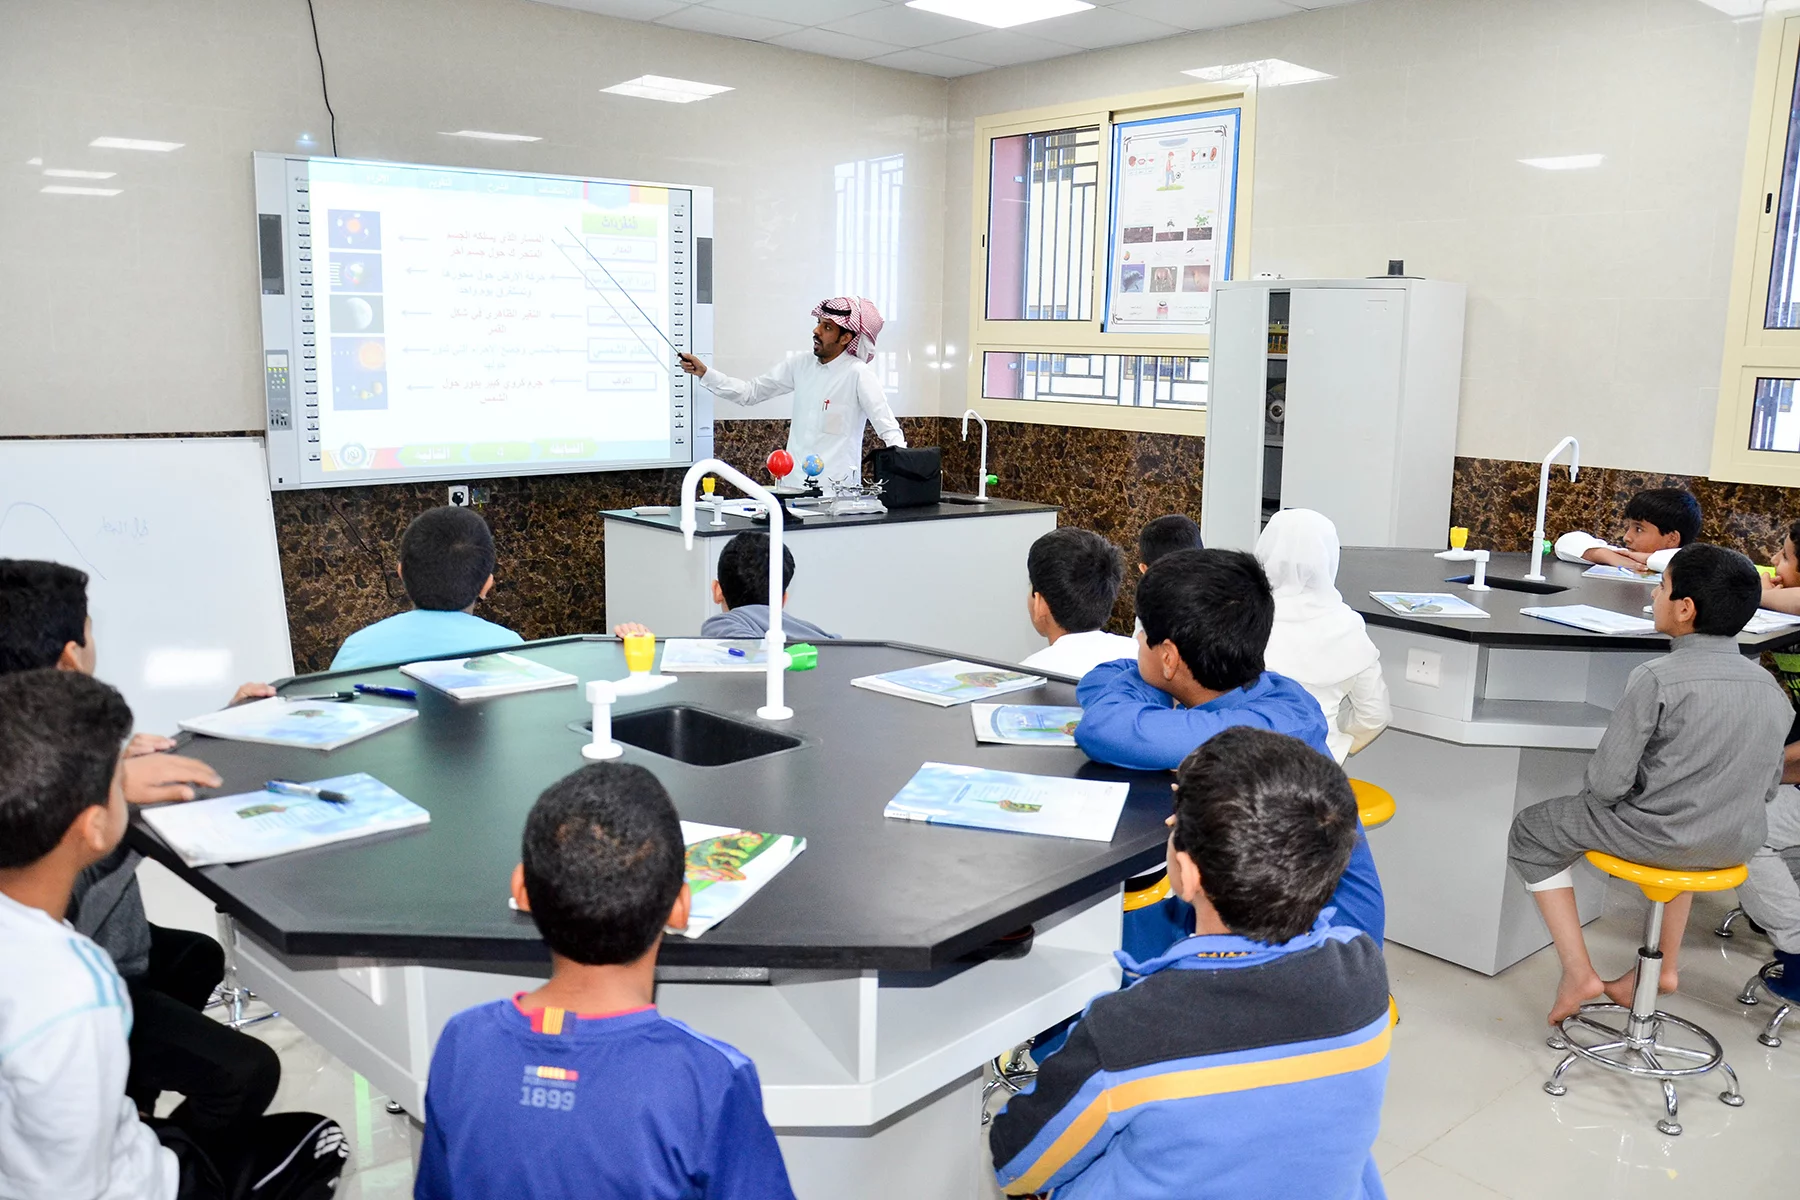 Science class at a school in Saudi Arabia